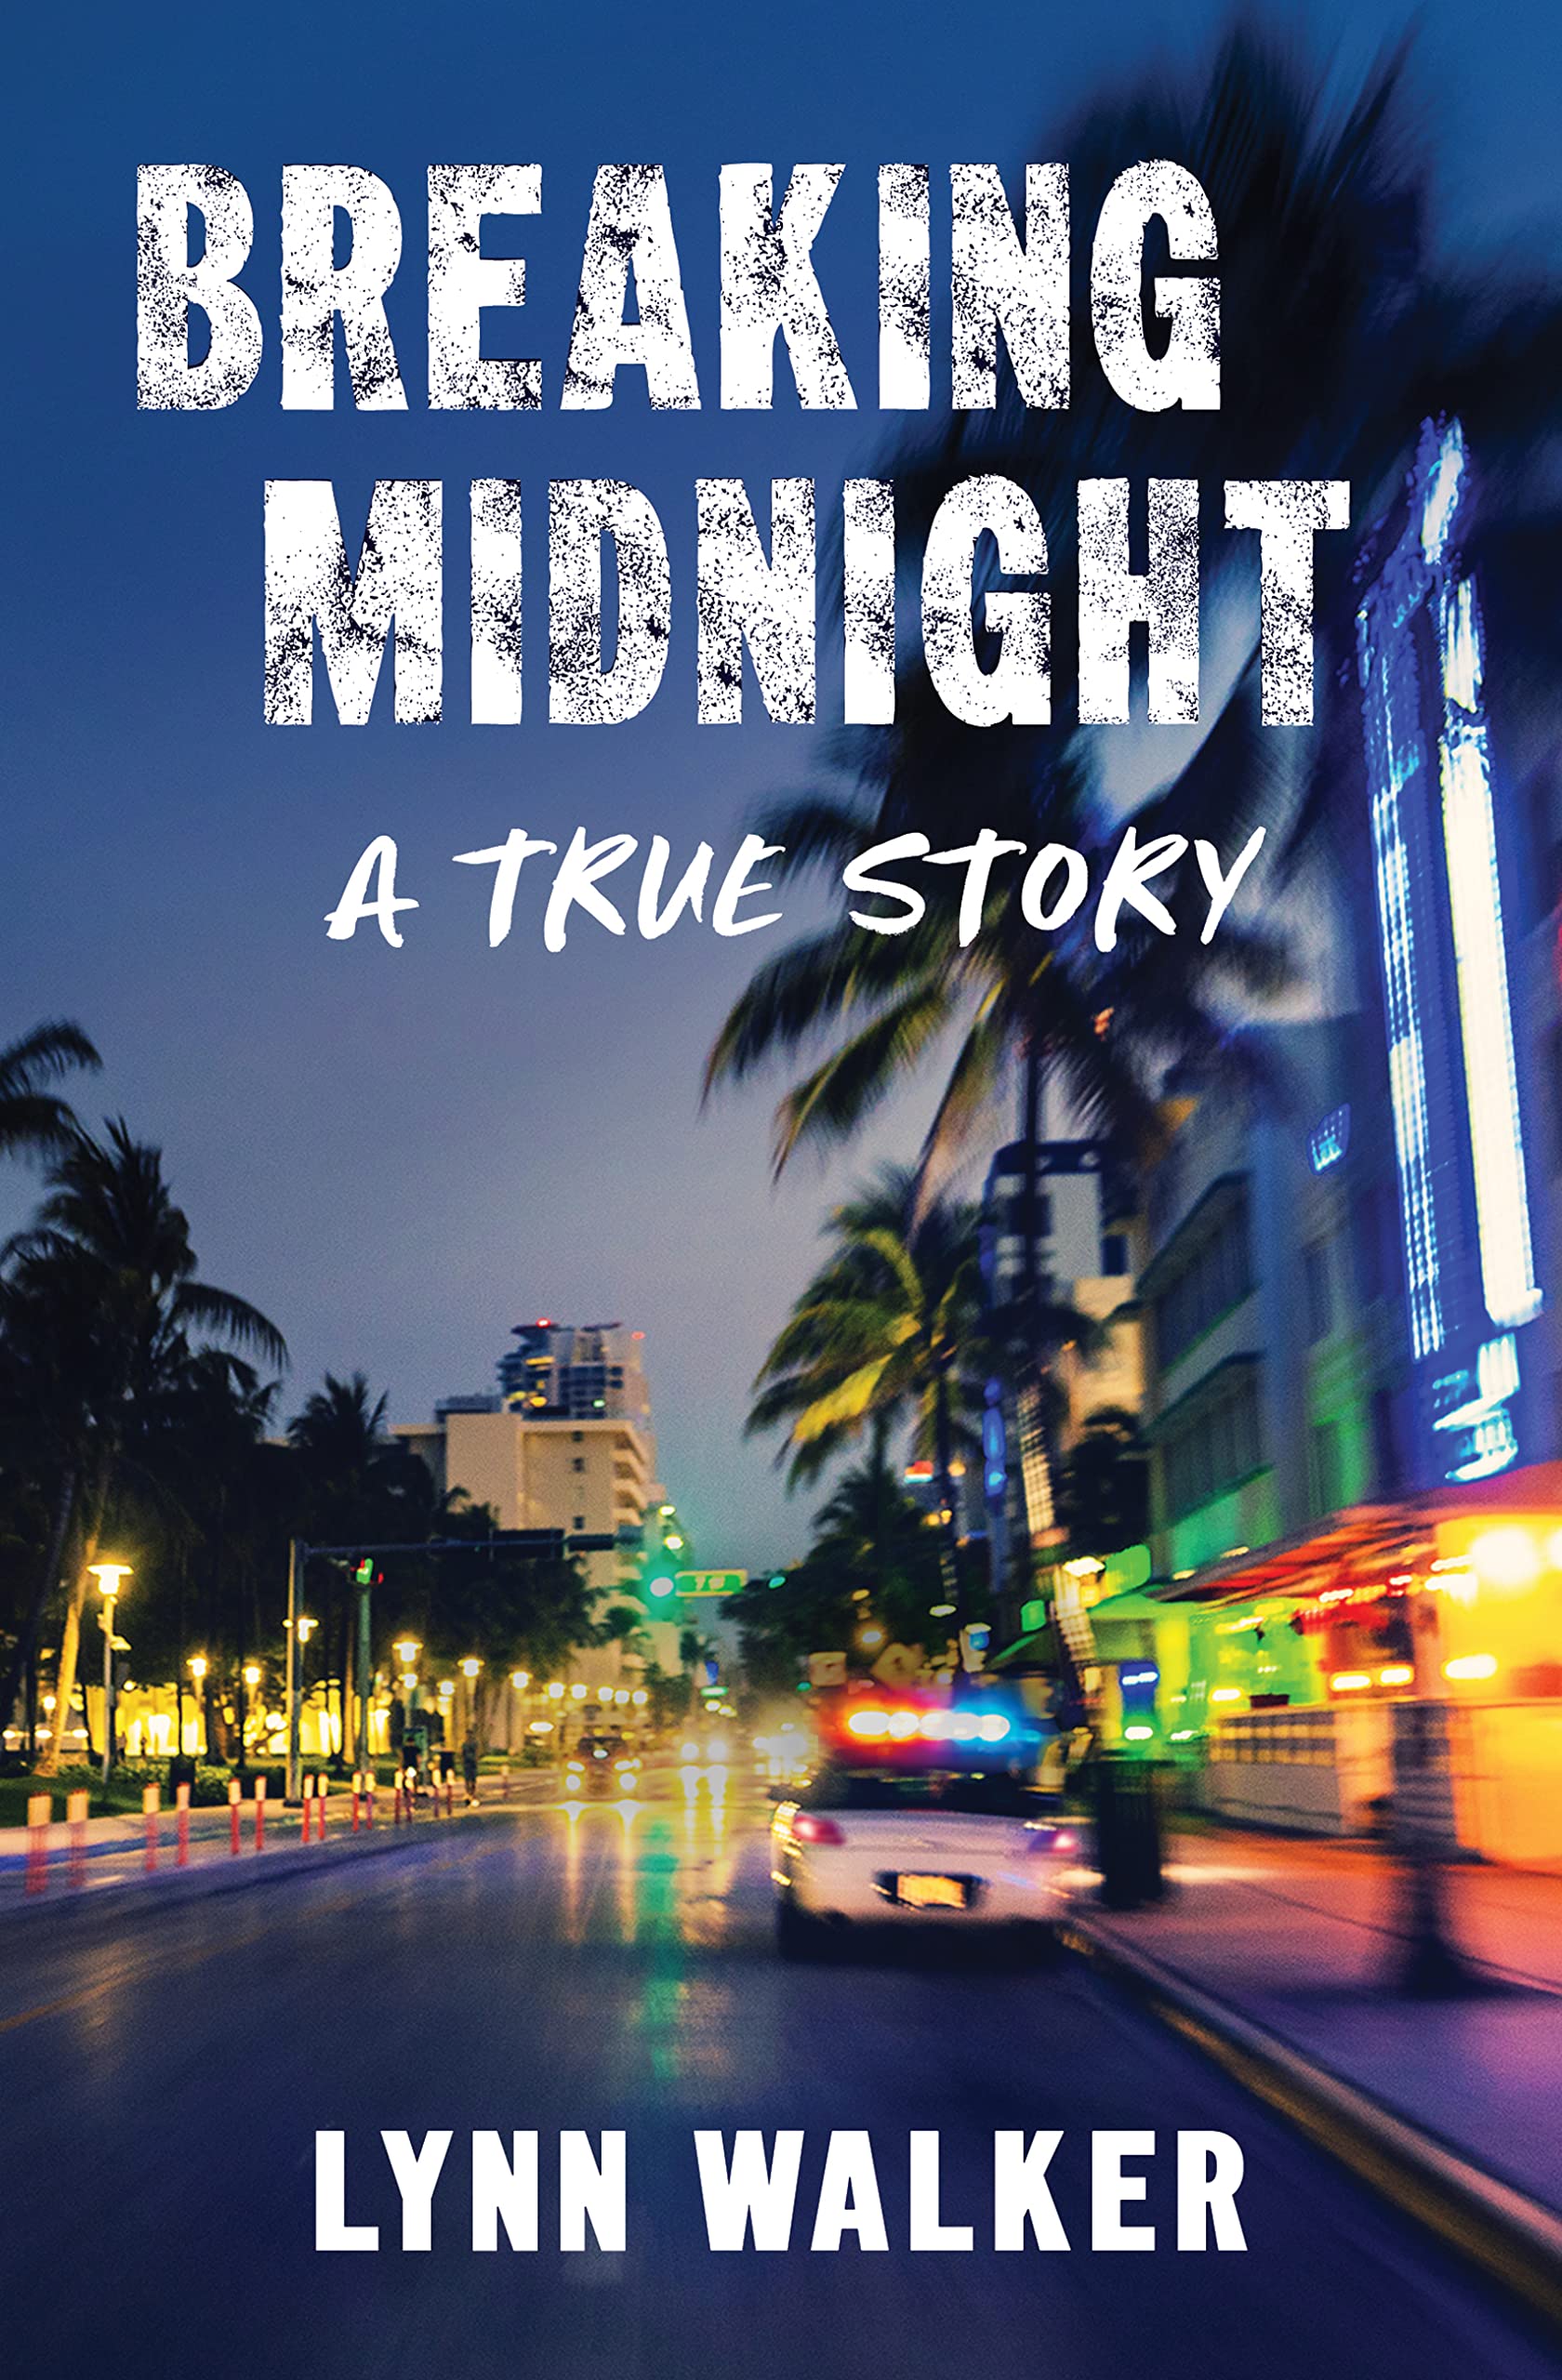 Breaking Midnight: A True Story